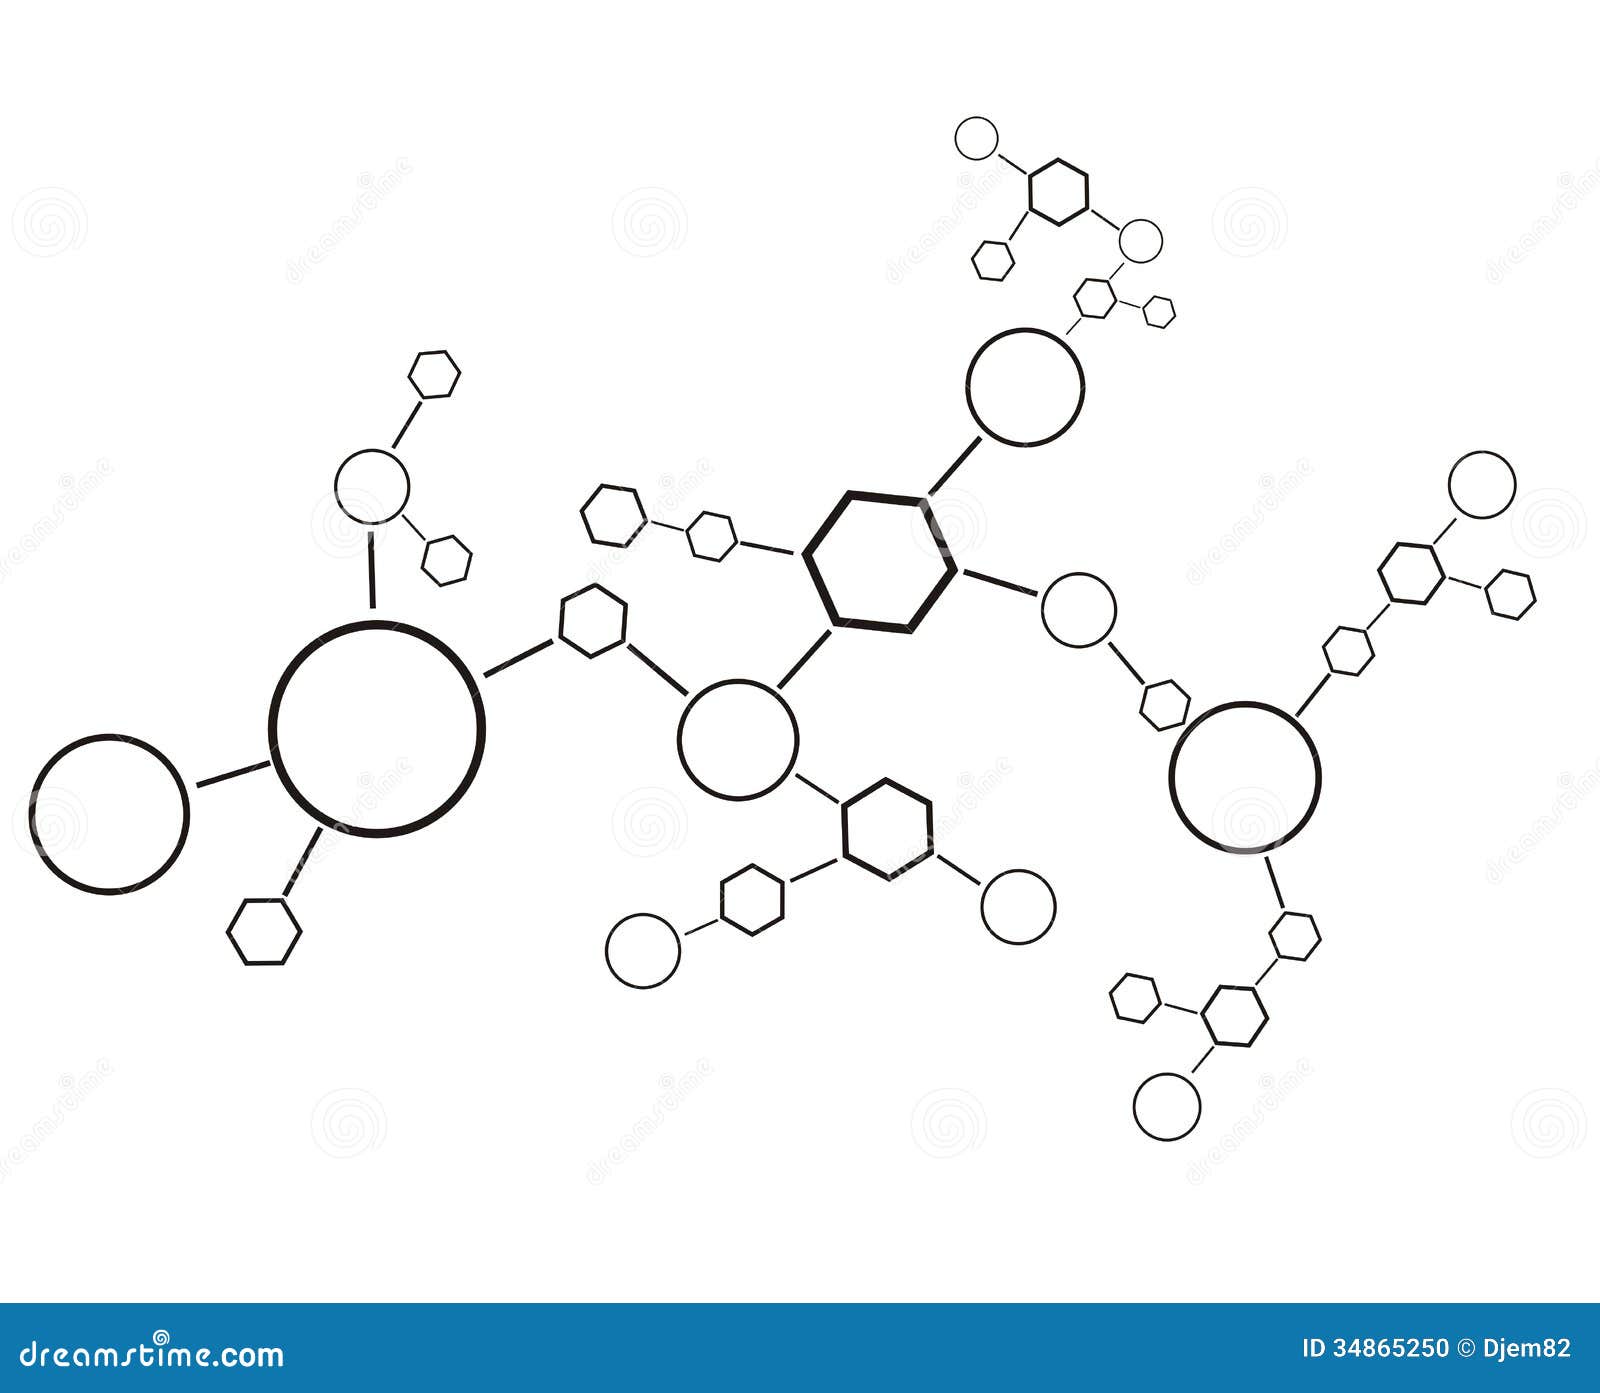 Theory of relativity Frank Worthley Ambassador Molecule background stock vector. Illustration of nautical - 34865250